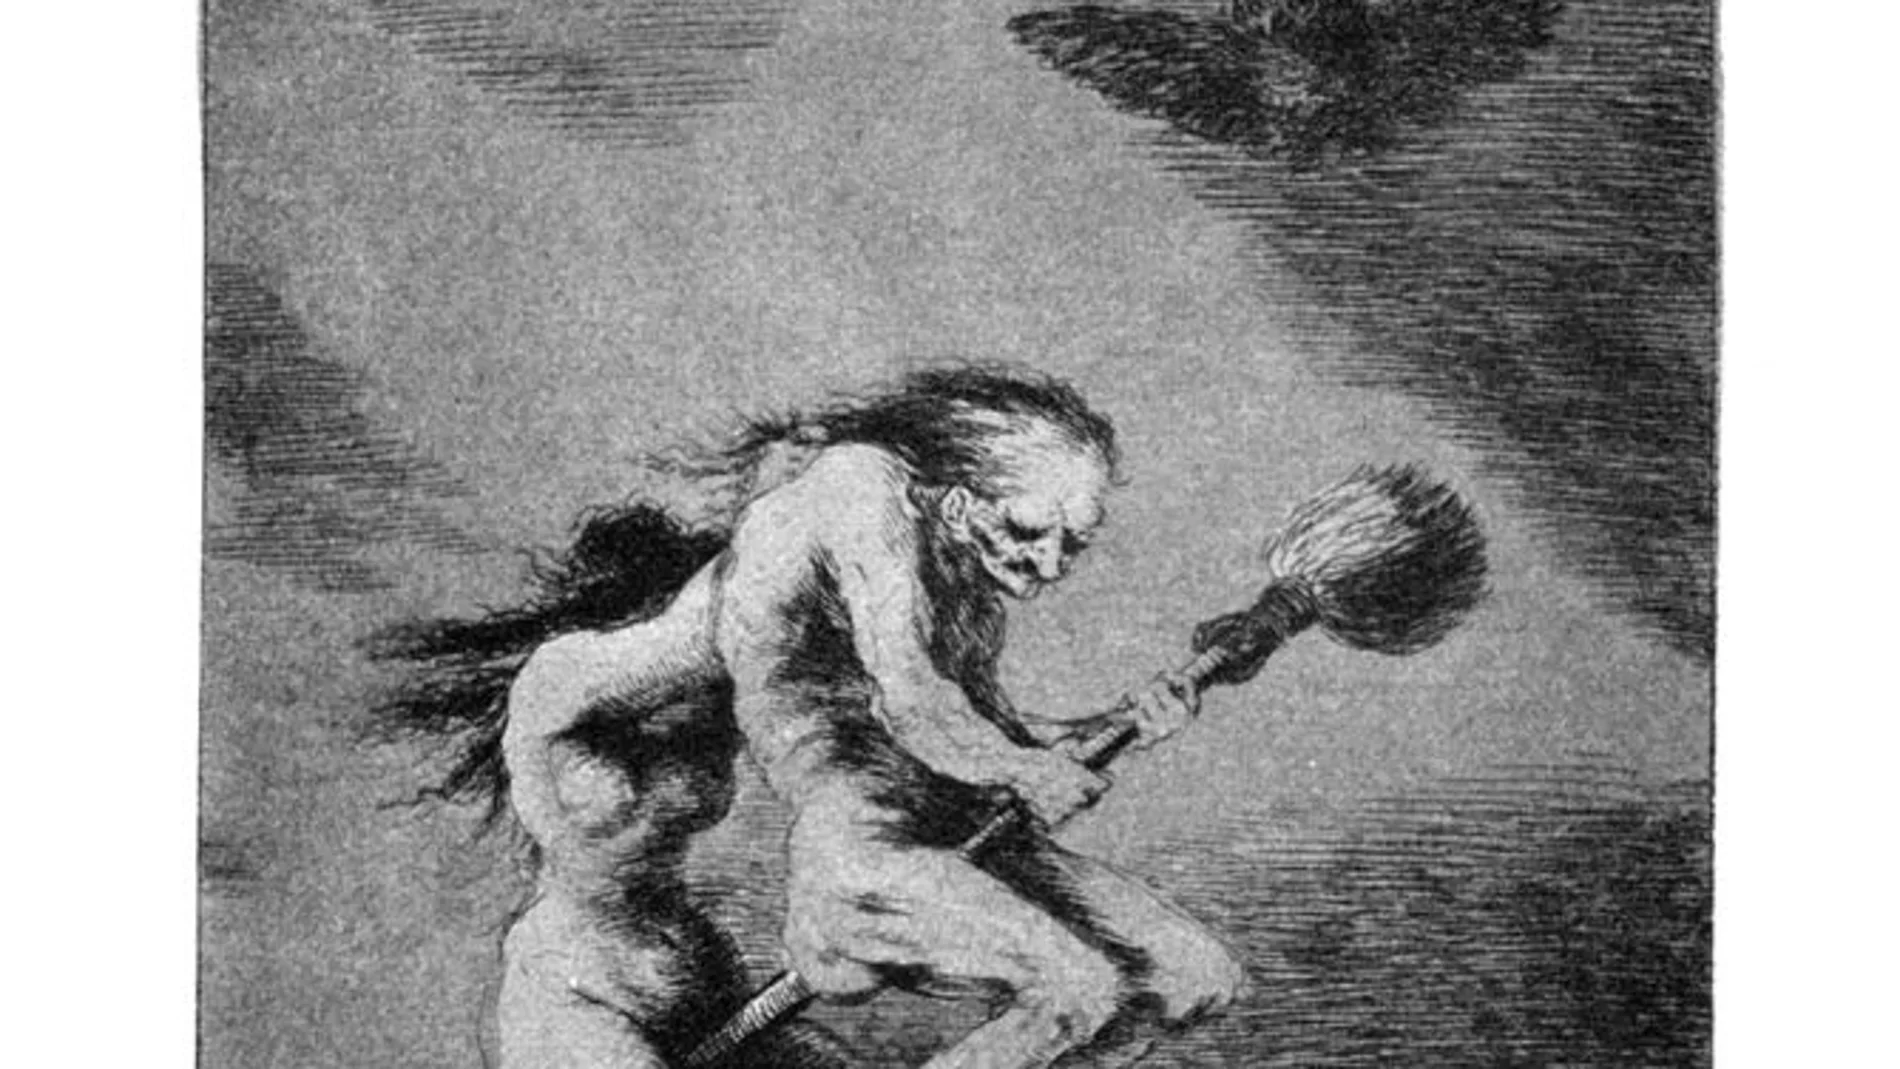 Obra de Goya, titulada "Linda maestra", que apela a la brujería